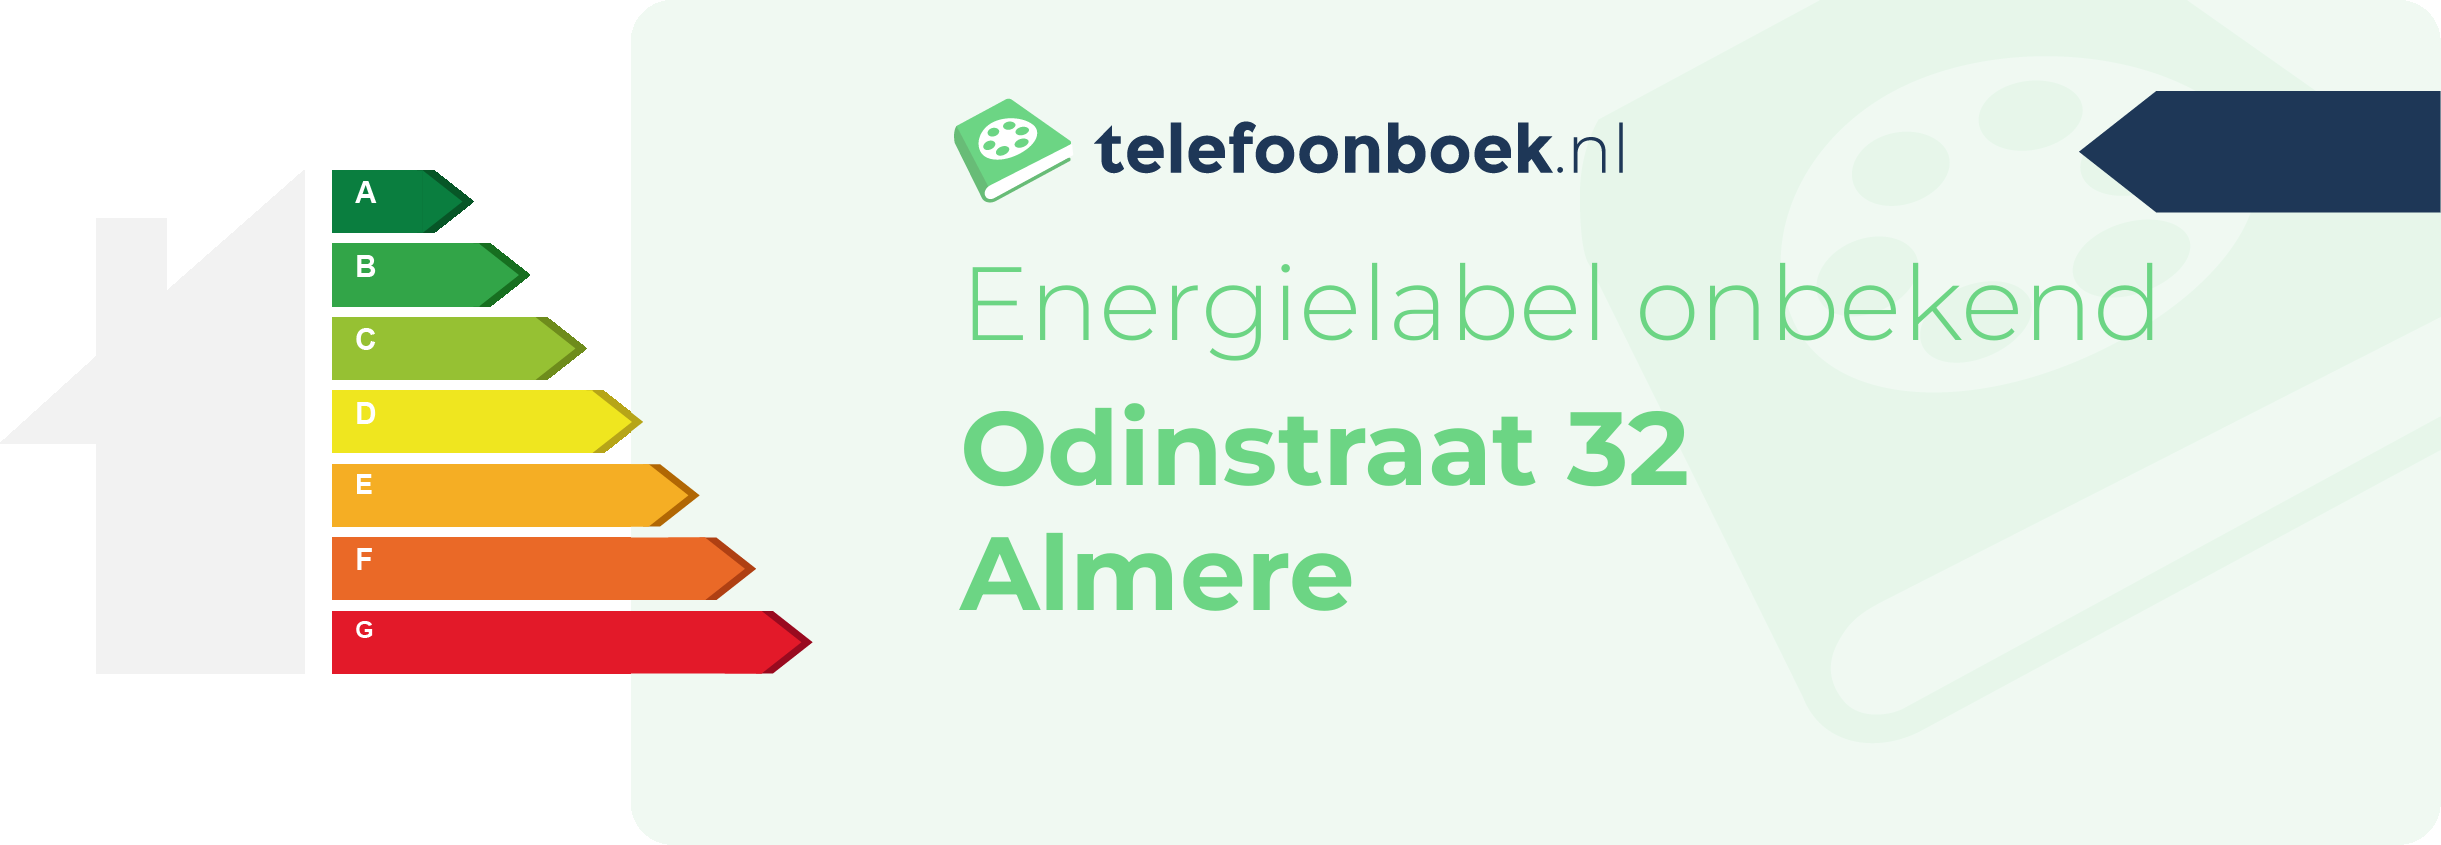 Energielabel Odinstraat 32 Almere